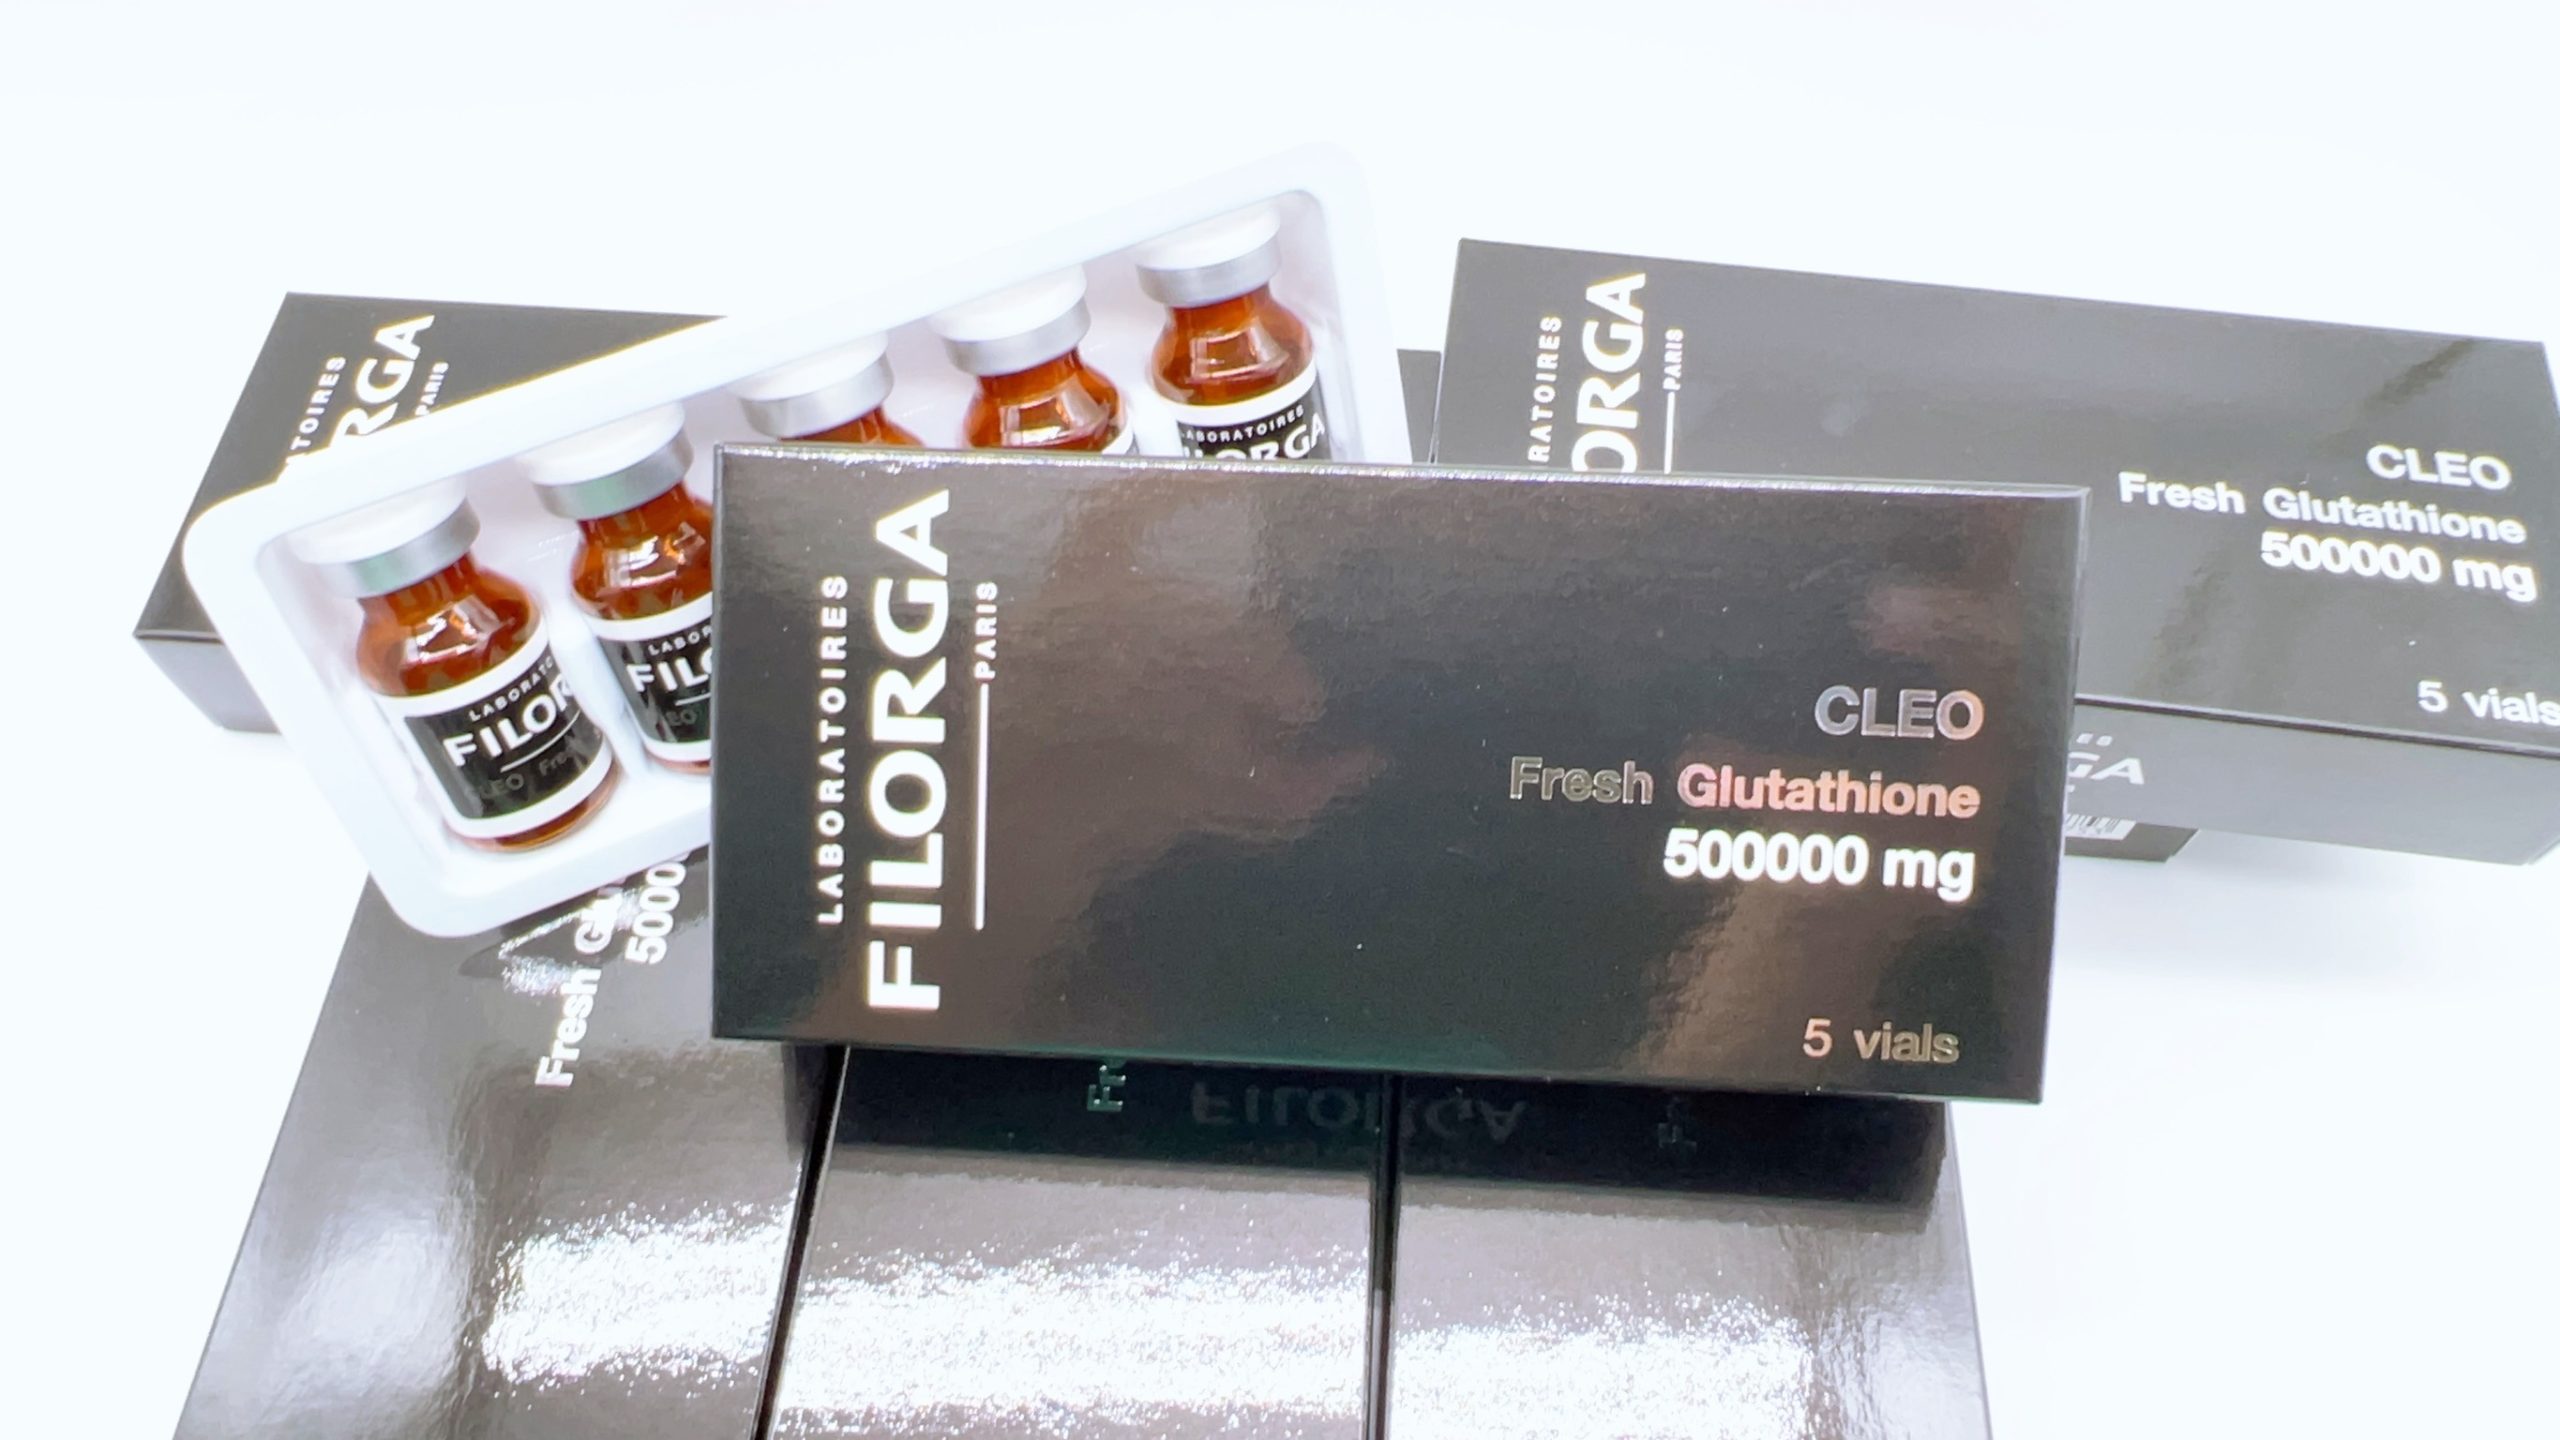 FILORGA CLEO FRESH GLUTA 500,000 mg (FRANCE) GLUTATHIONE WHITENING